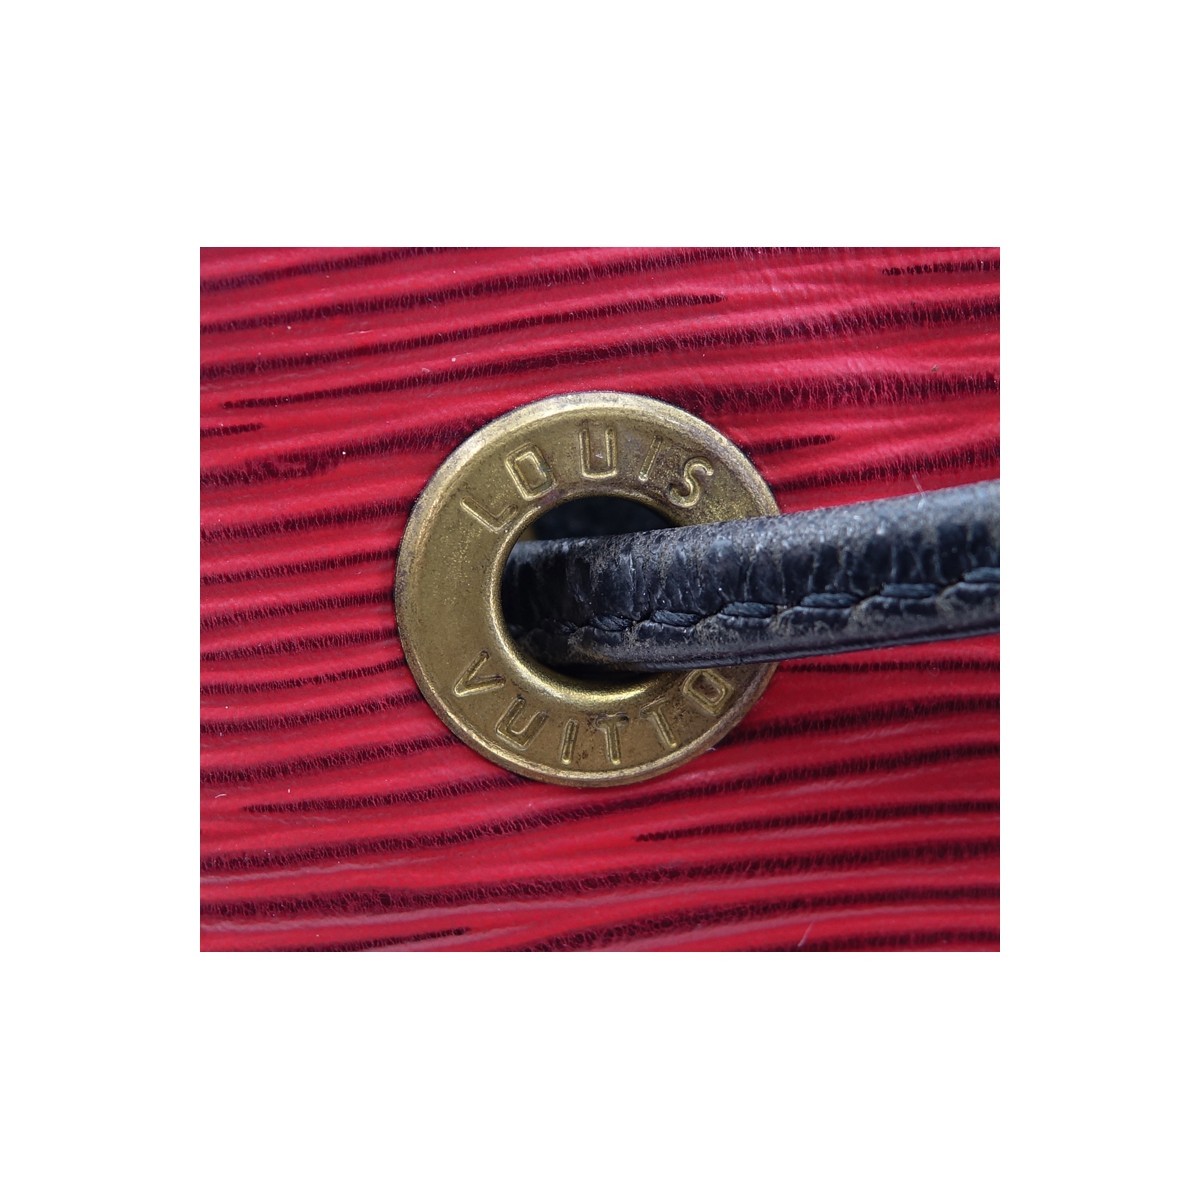 Louis Vuitton Red/Black Epi Leather Noe Bicolor PM Bag. Golden brass hardware, black suede interior.